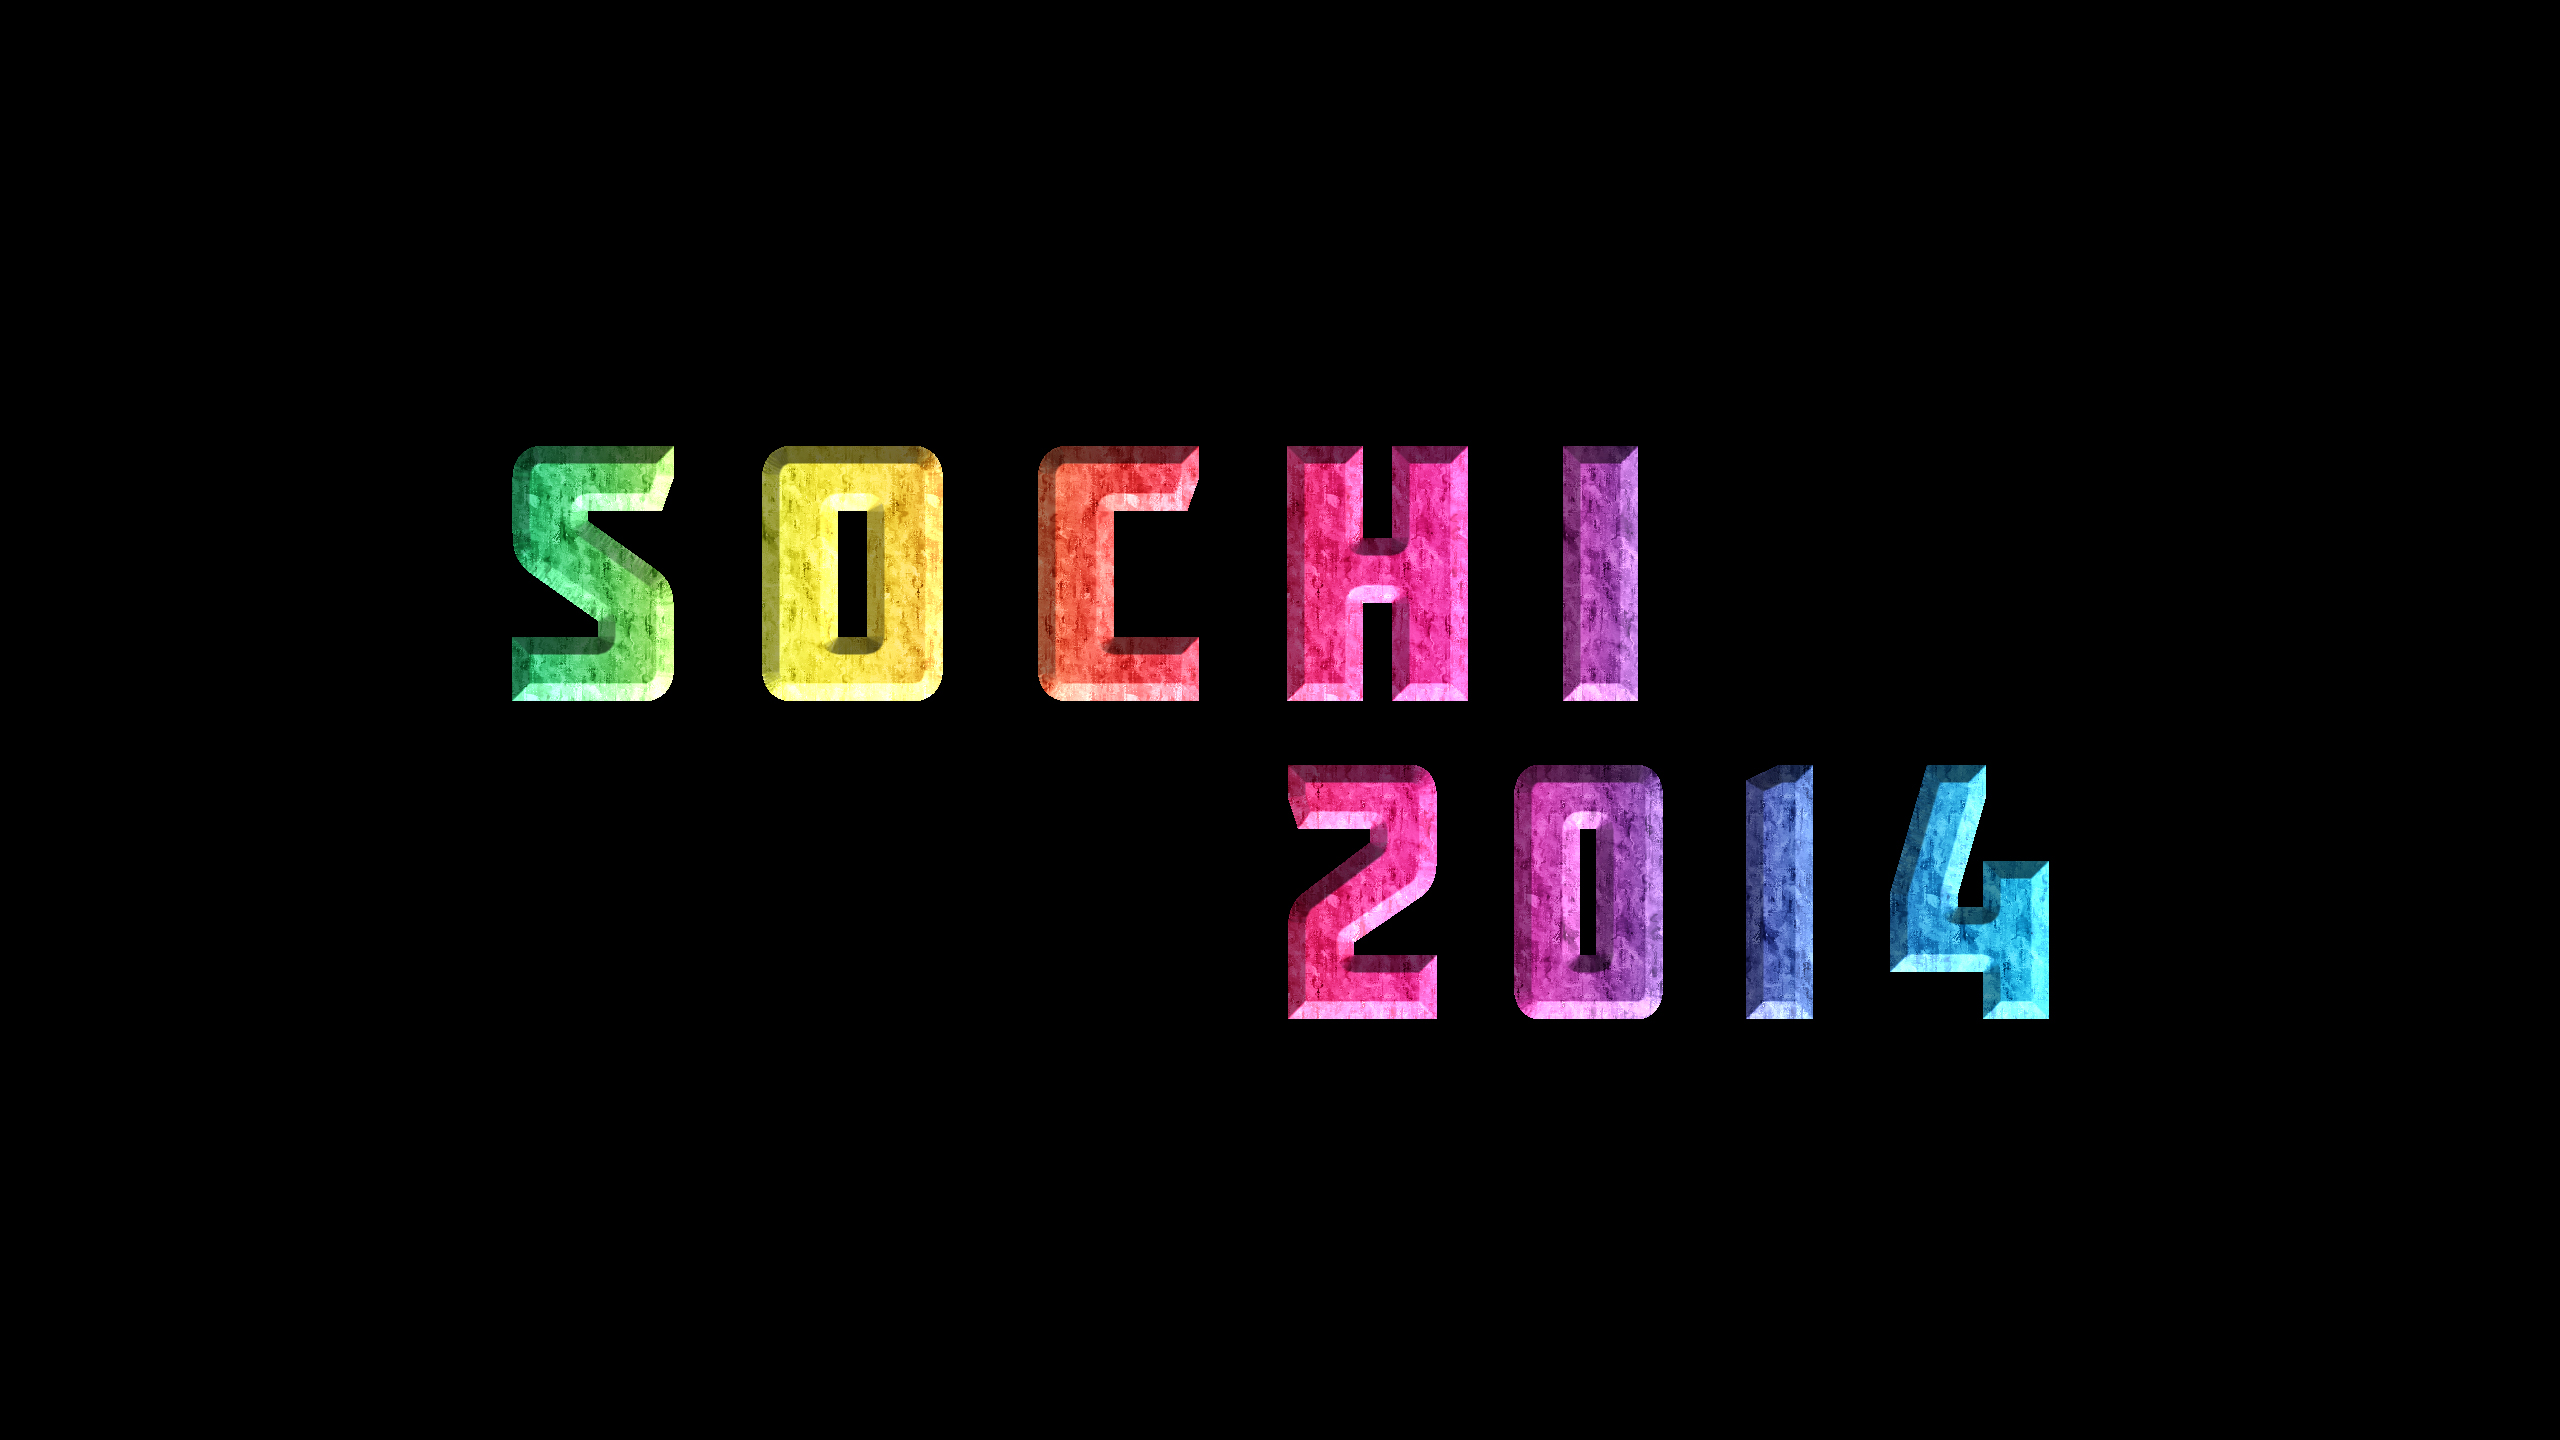 sports, winter olimpic games sochi 2014